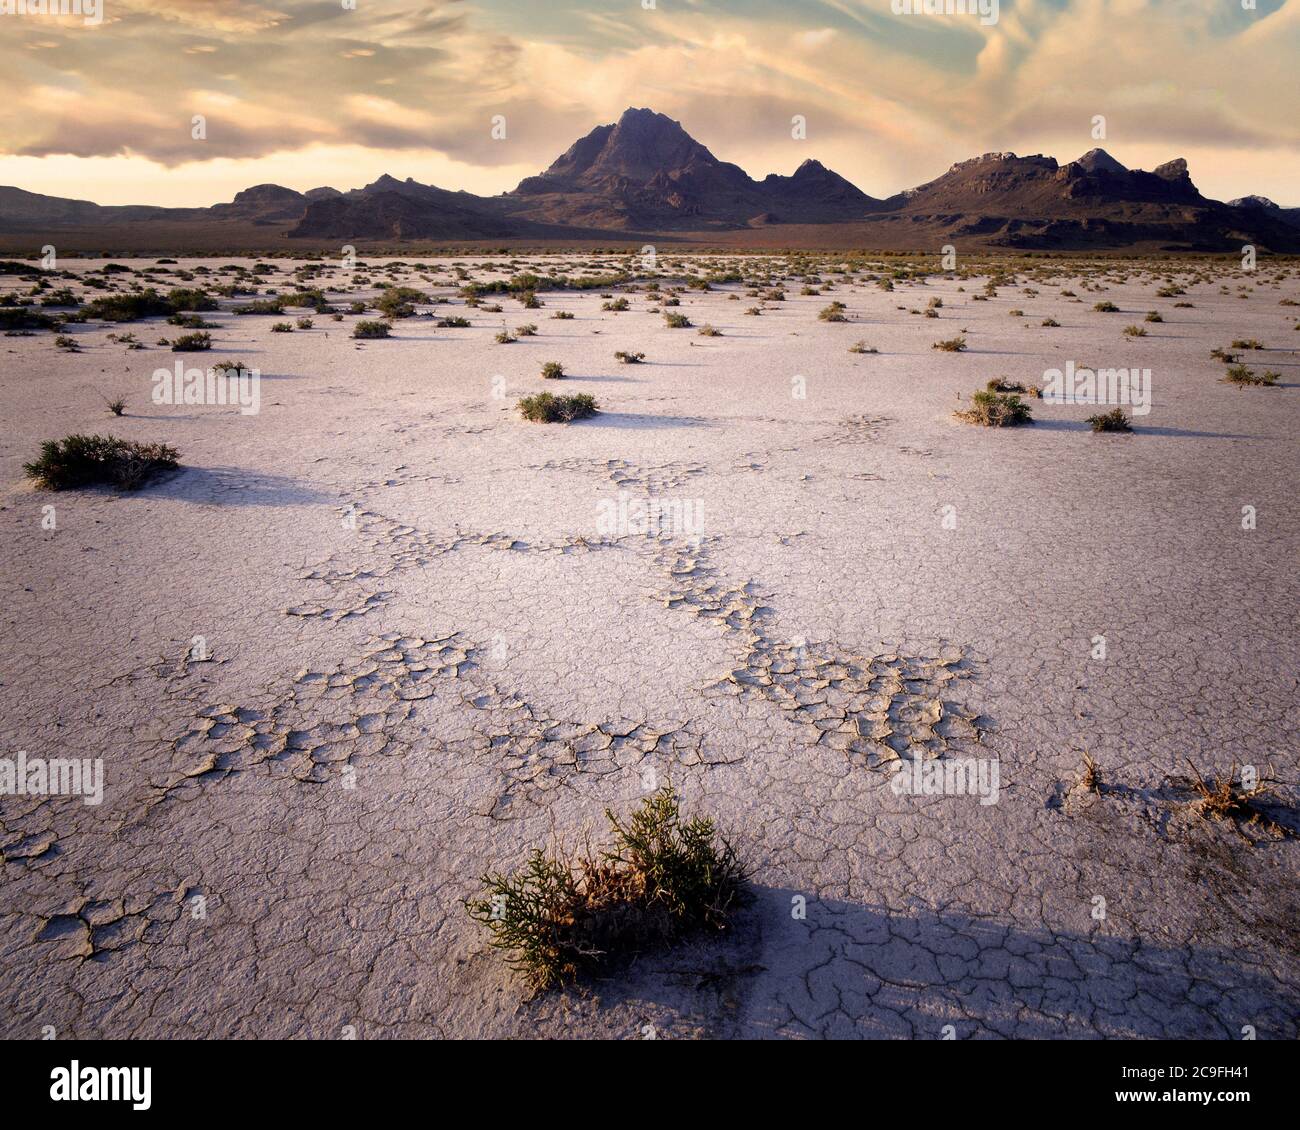 USA - UTAH: Bonneville Salt Flats at the Great Salt Lake Desert Stock Photo